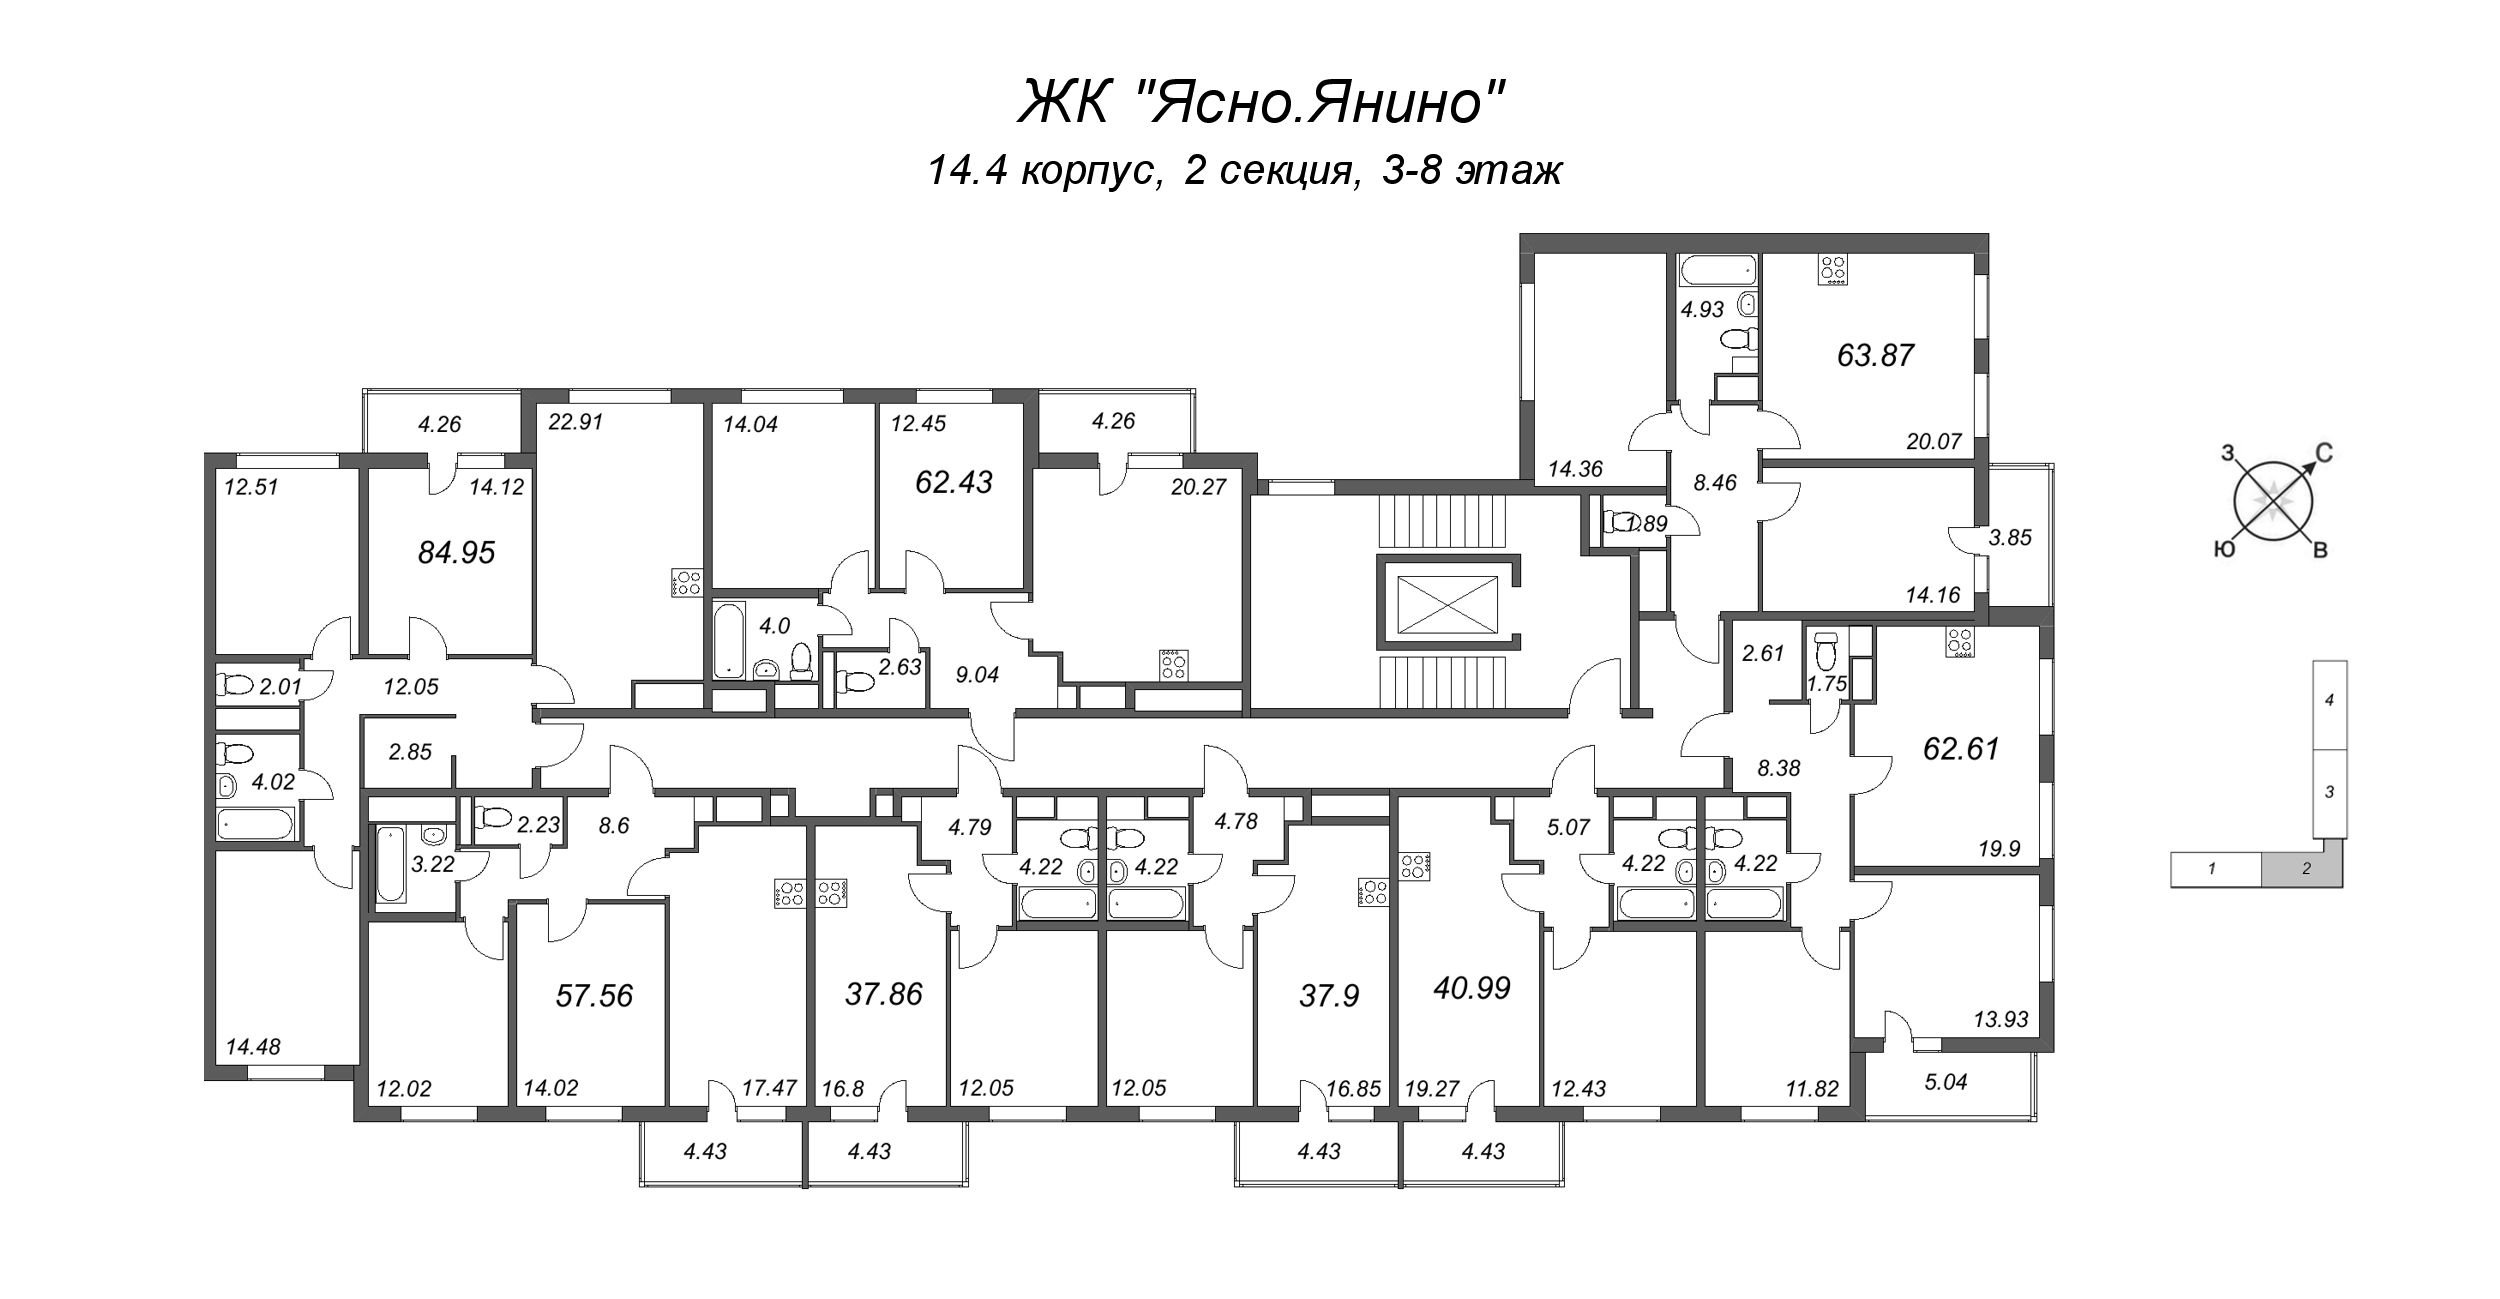 2-комнатная (Евро) квартира, 37.86 м² - планировка этажа